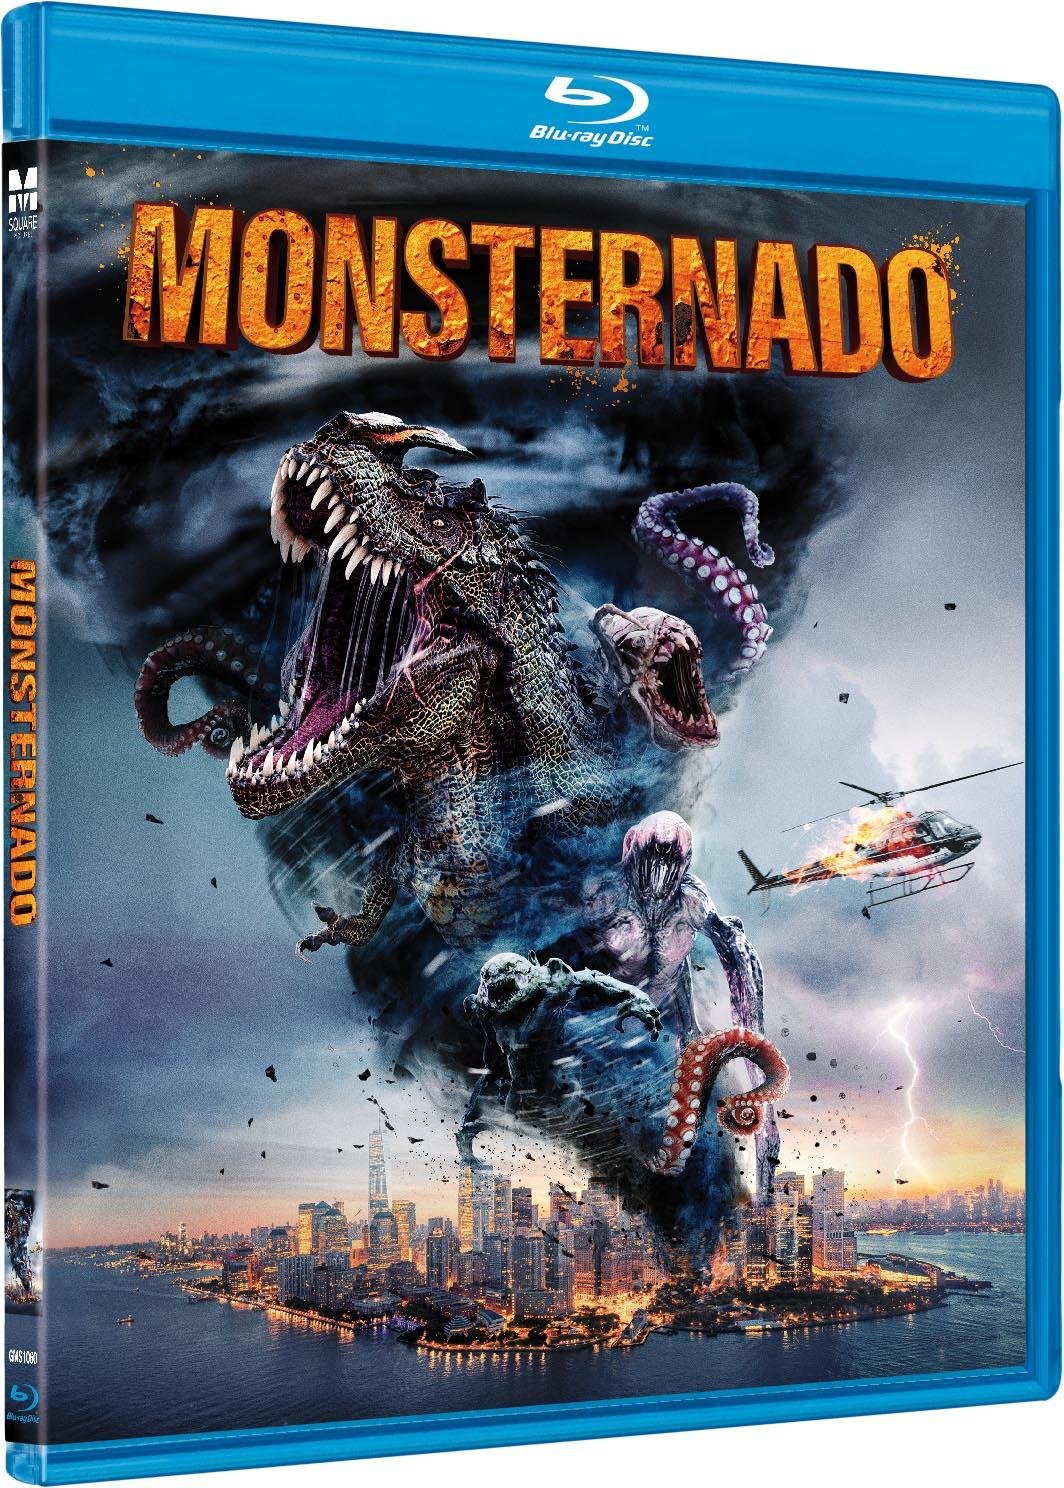 Monsternado - Uncut Fassung  (Blu-ray Disc)